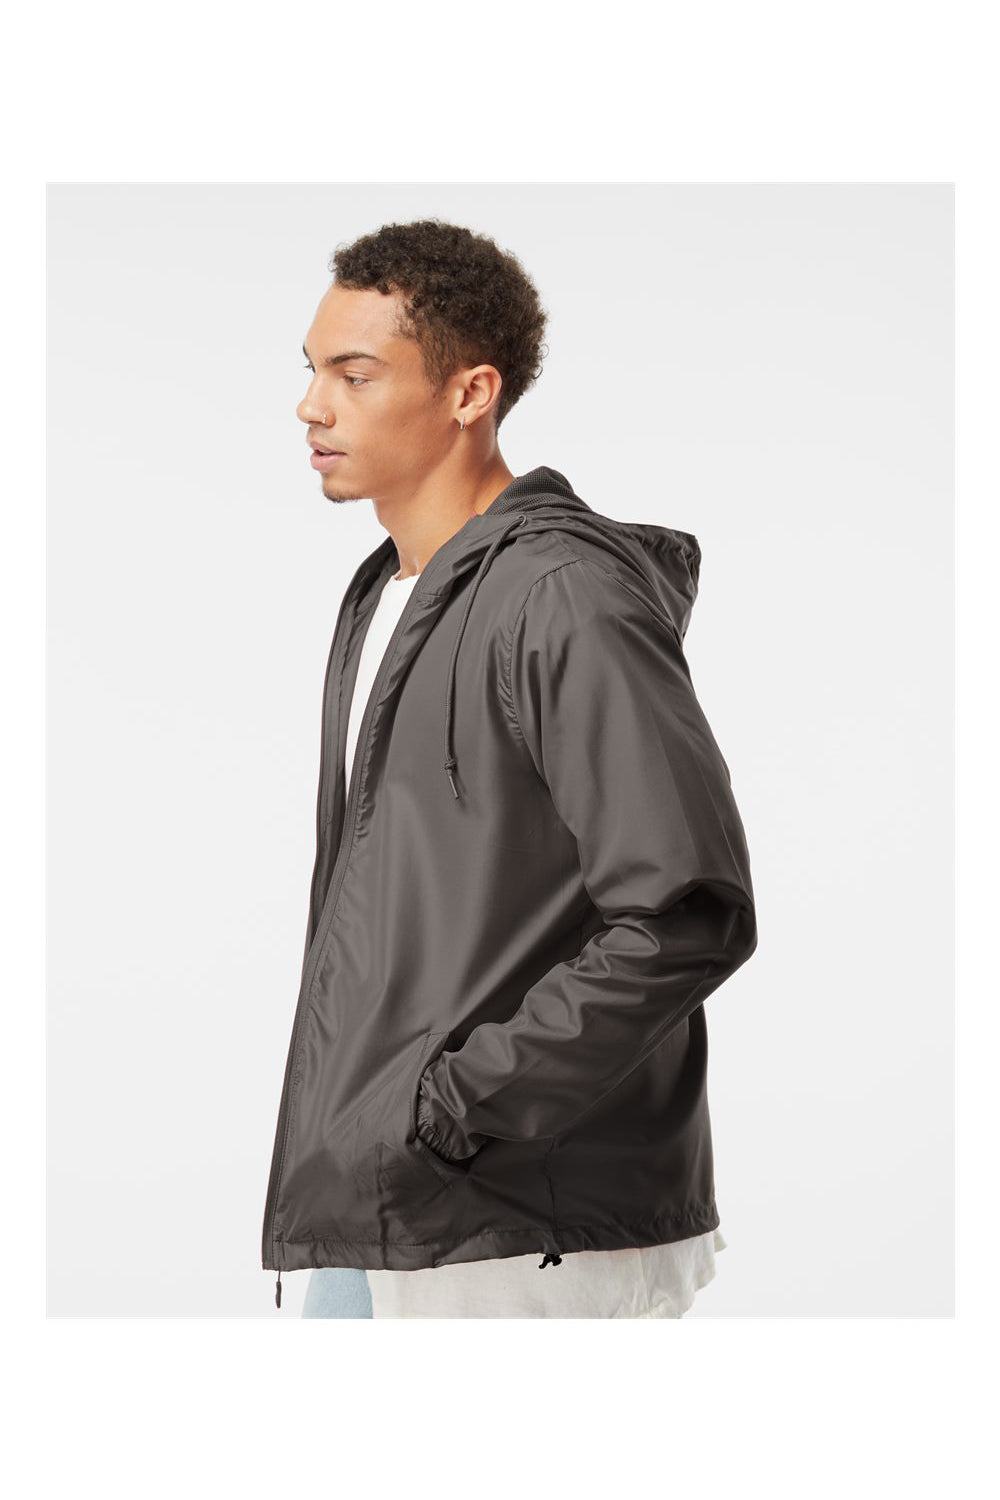 Independent Trading Co. EXP54LWZ Mens Full Zip Windbreaker Hooded Jacket Graphite Grey Model Side